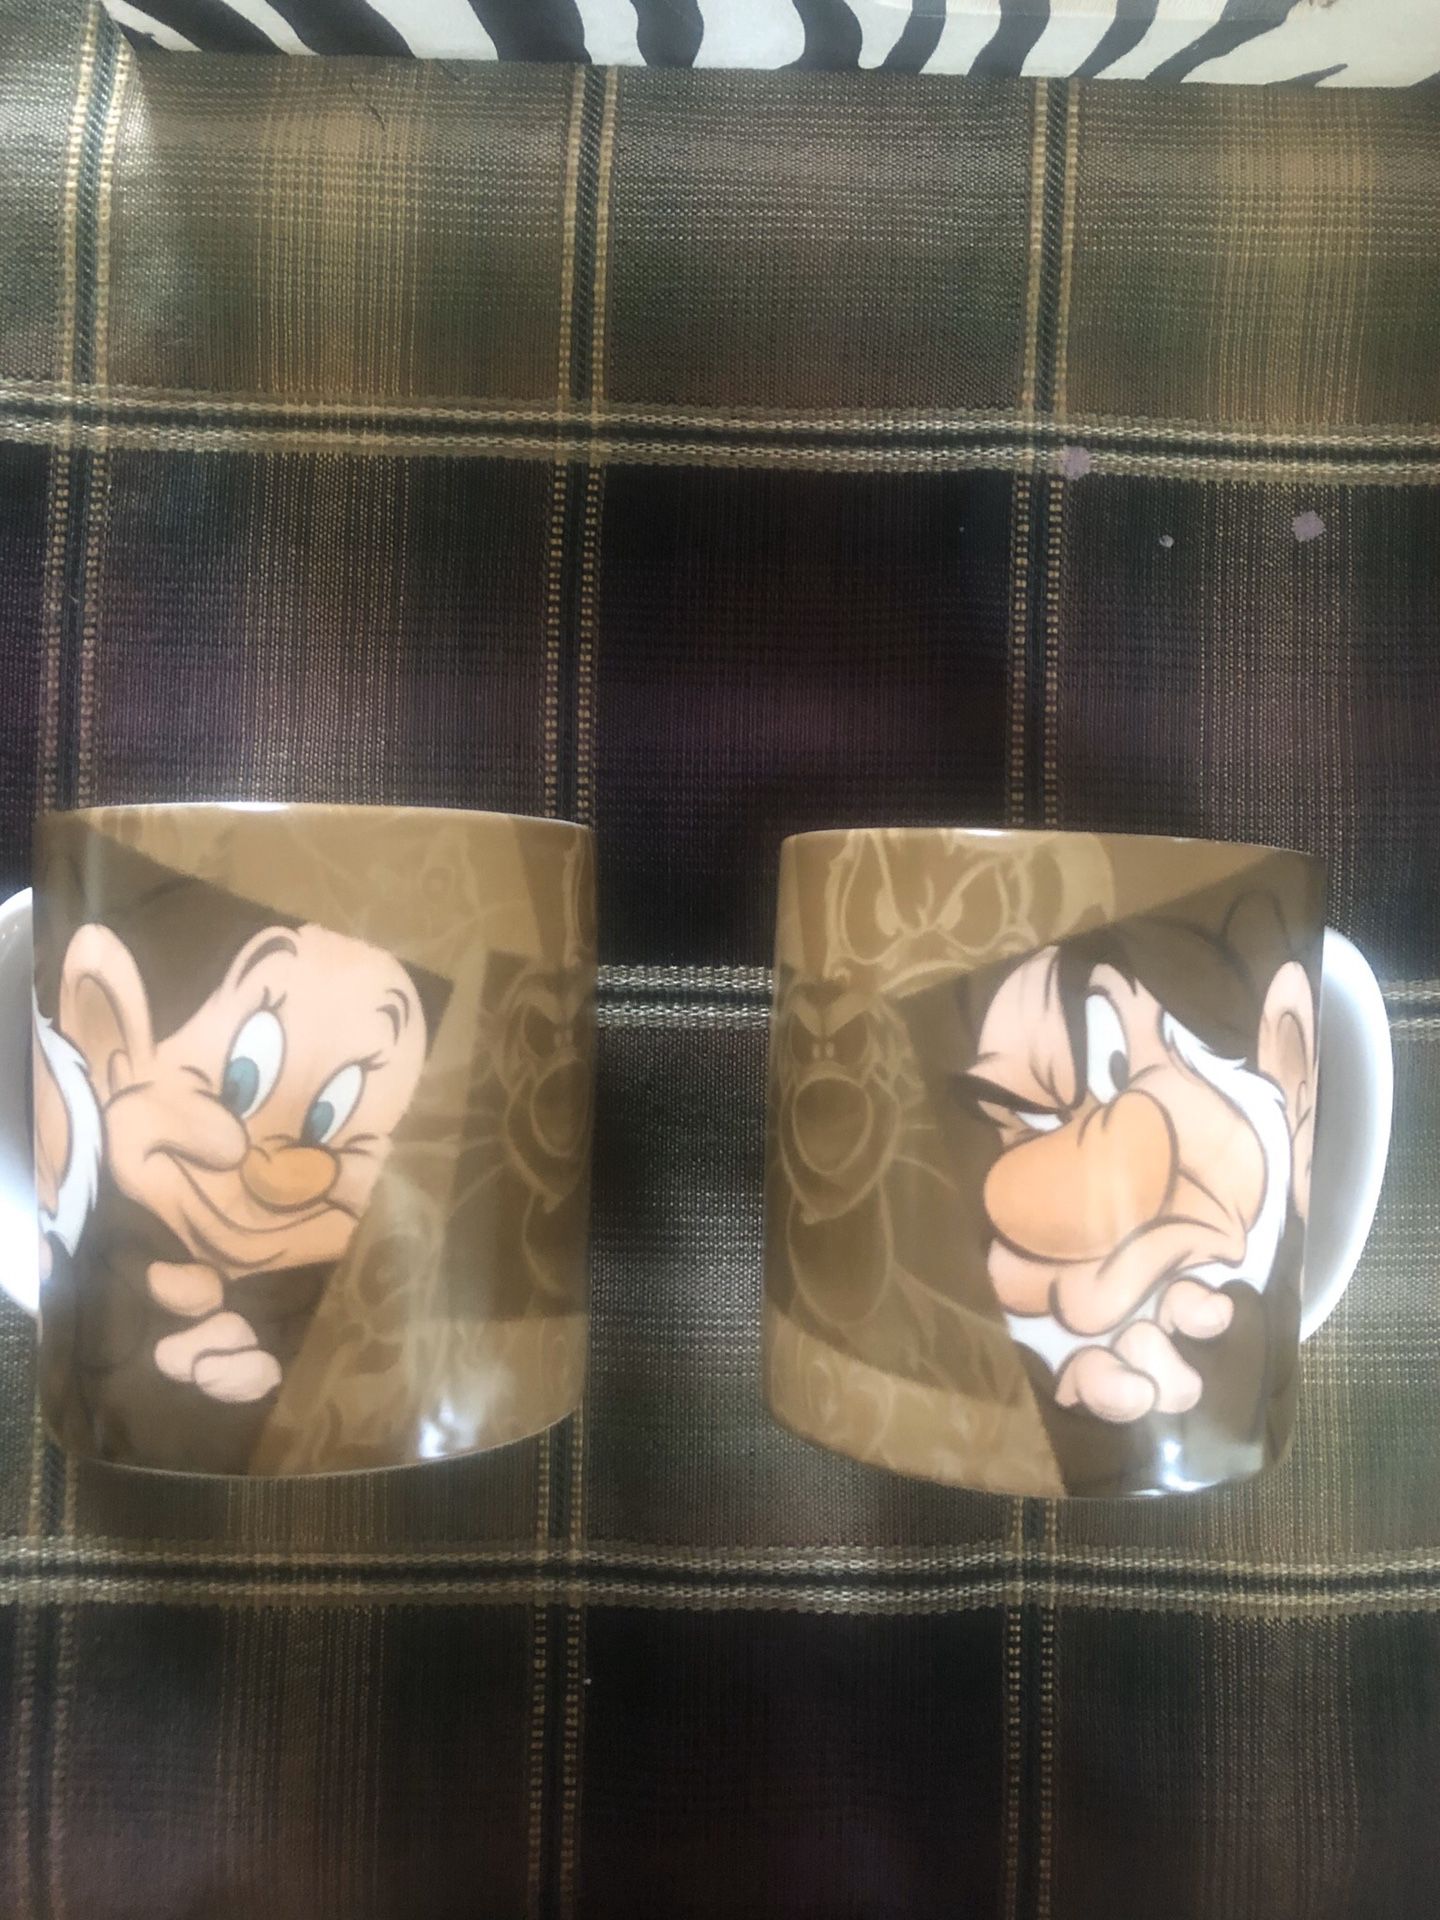 Disney 7 dwarfs set of cups